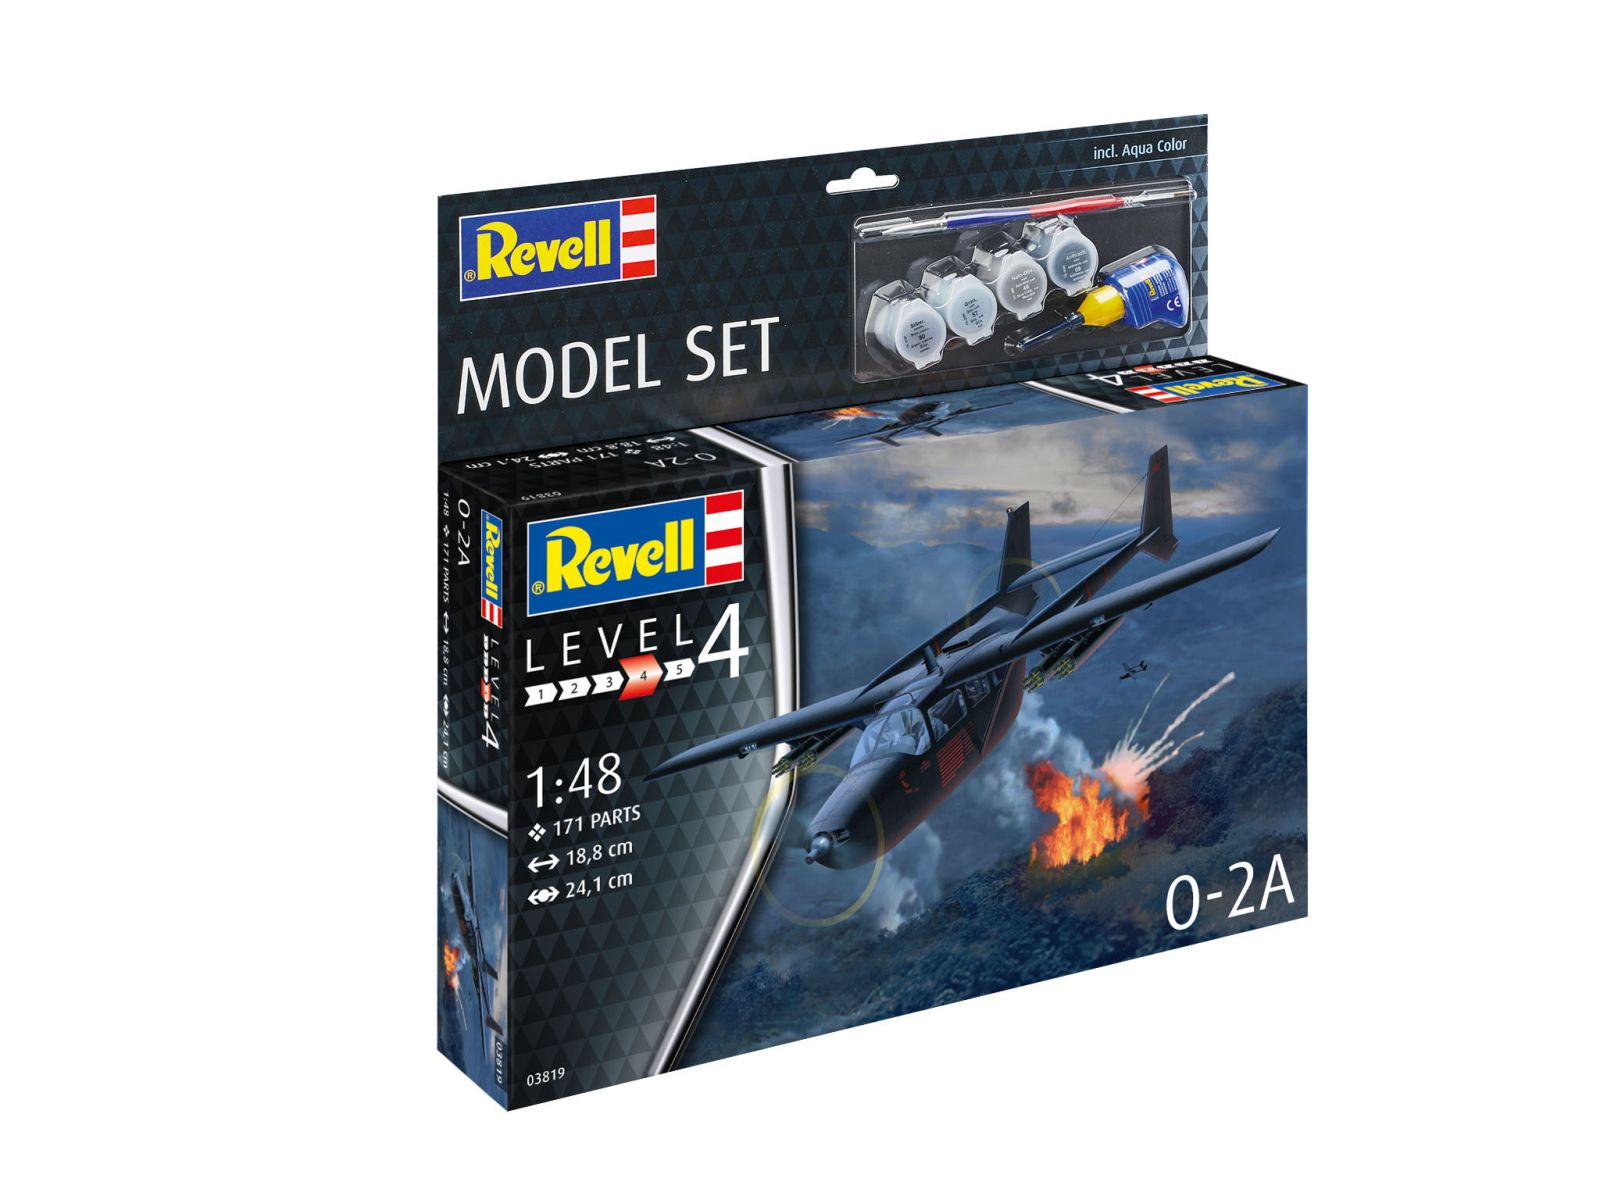 Revell 63819 - Model Set O-2A